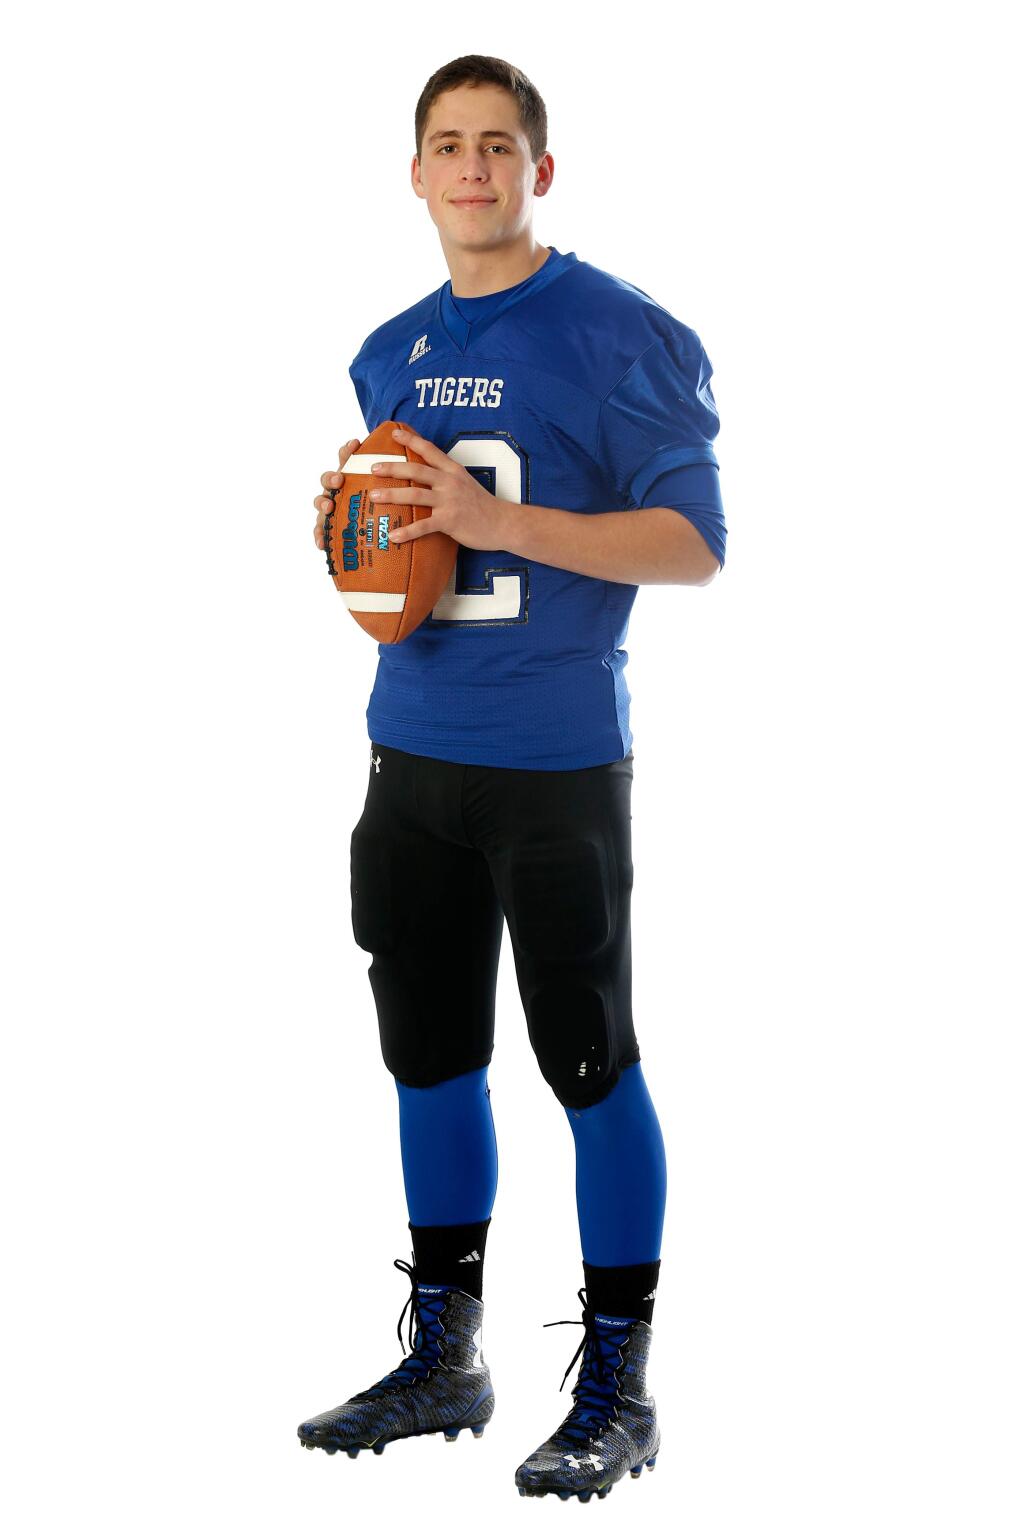 Analy High School quarterback Jack Newman, All-Empire large schools football player of the year. (Alvin Jornada / The Press Democrat)